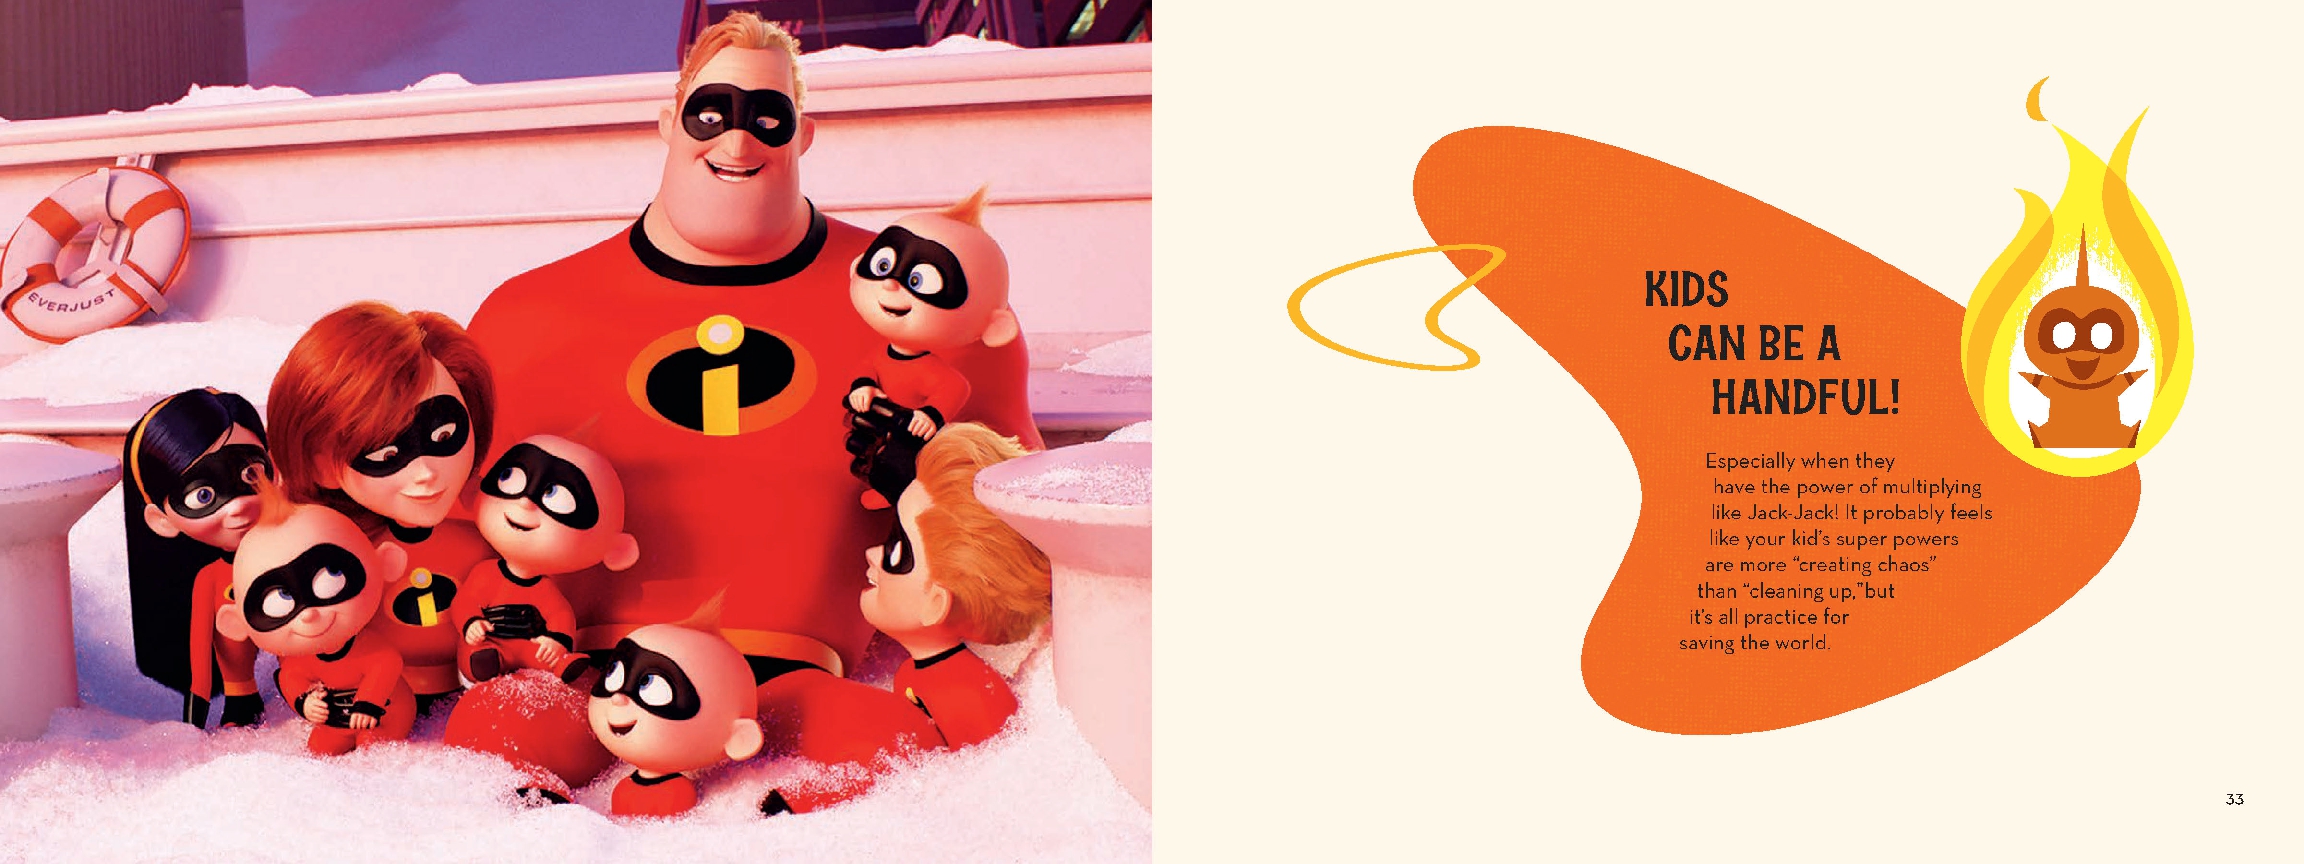 Disney/Pixar How to Raise Incredible Kids